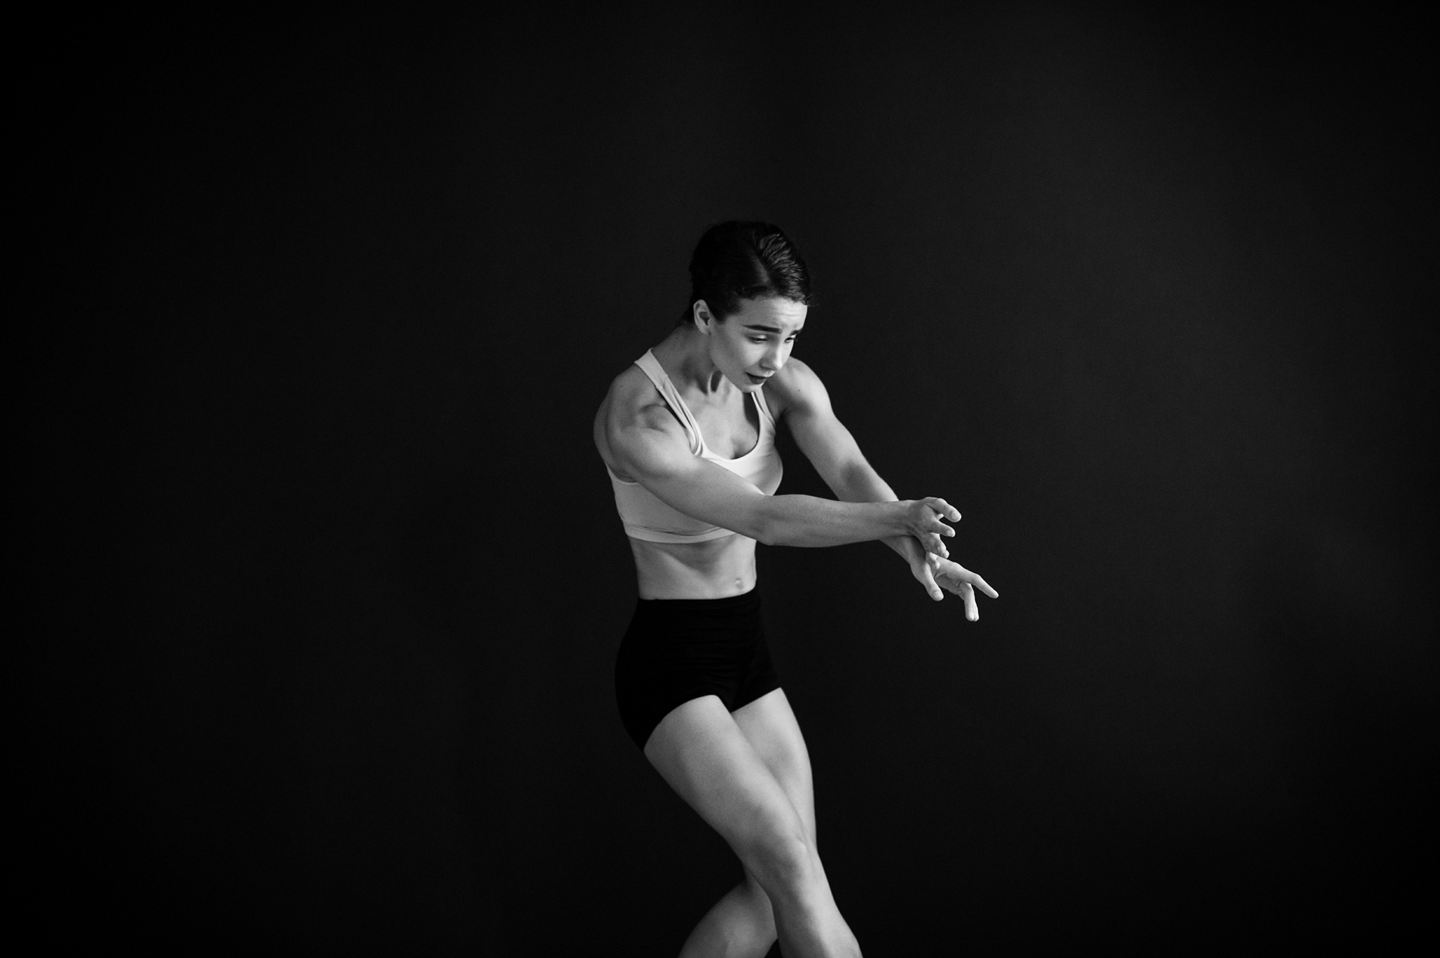 Los Angeles Dance Portrait Photo - Olga Sokolova - by Tommy Xing Photography 03.JPG